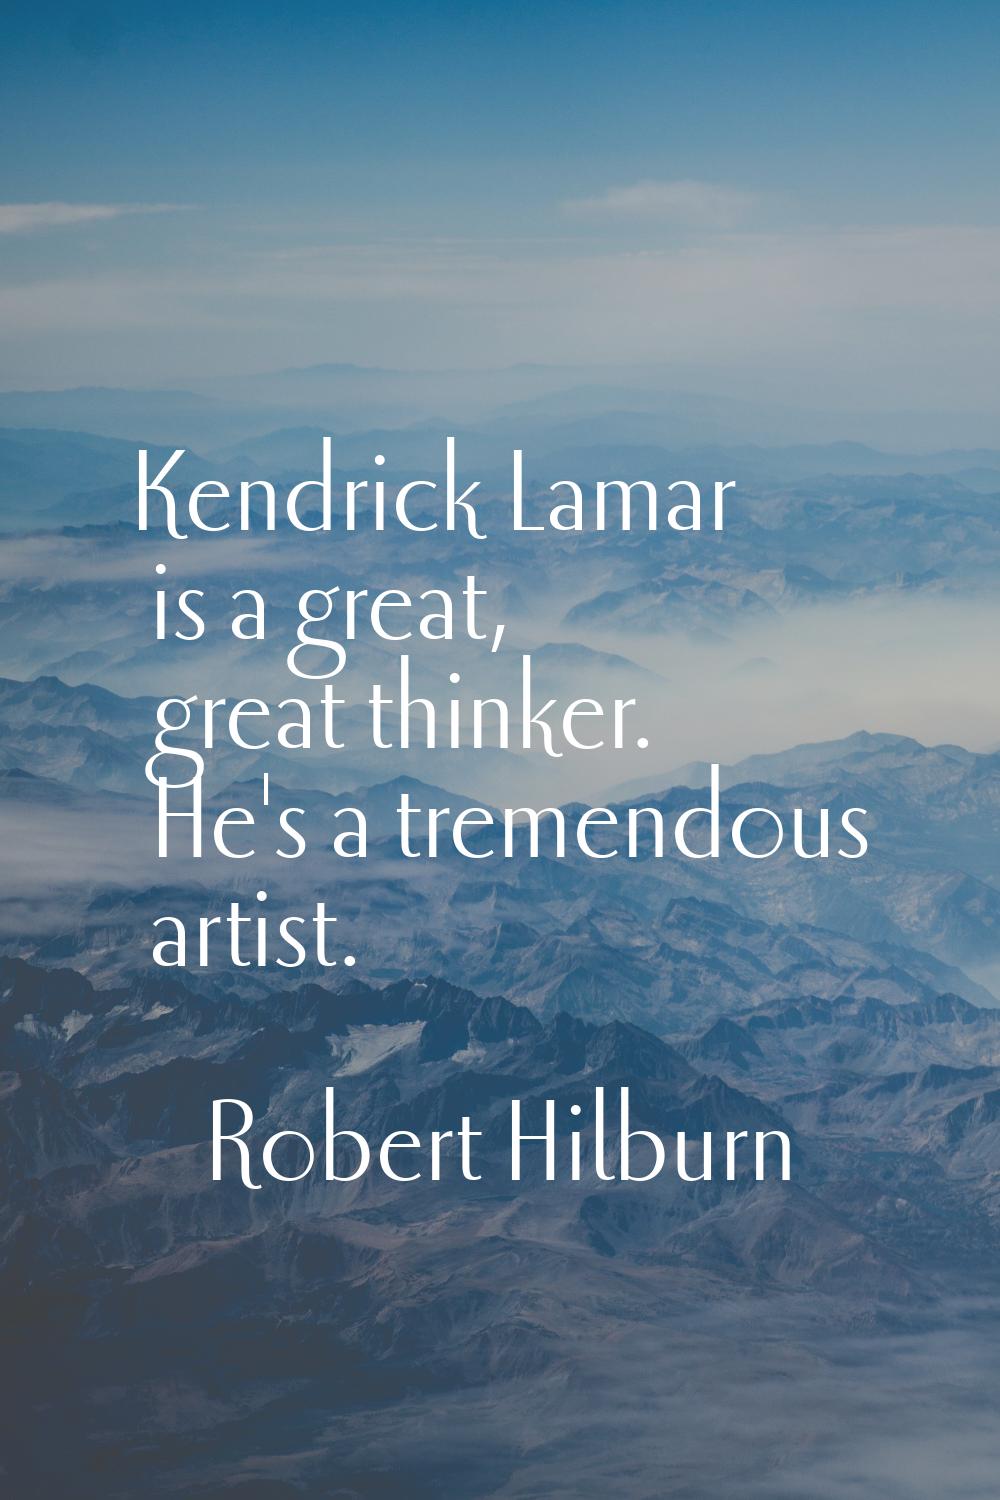 Kendrick Lamar is a great, great thinker. He's a tremendous artist.